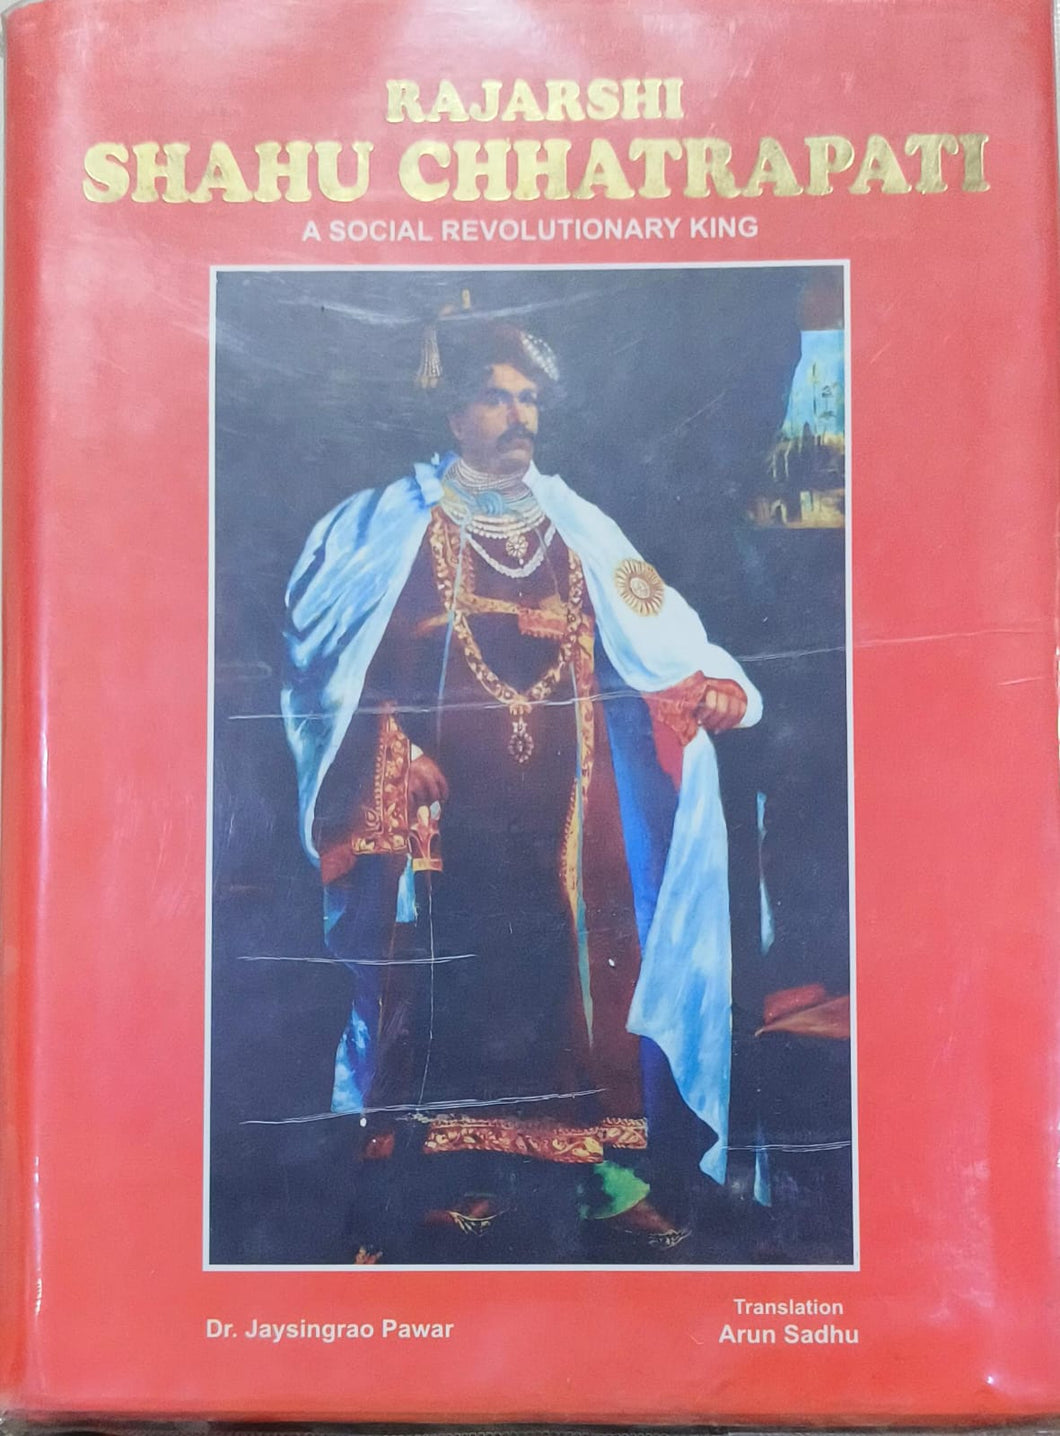 Rajashree Shahu Chhatrapati book a social Revolutionary king [SIGN COPY] [hardcover] [Rare books]